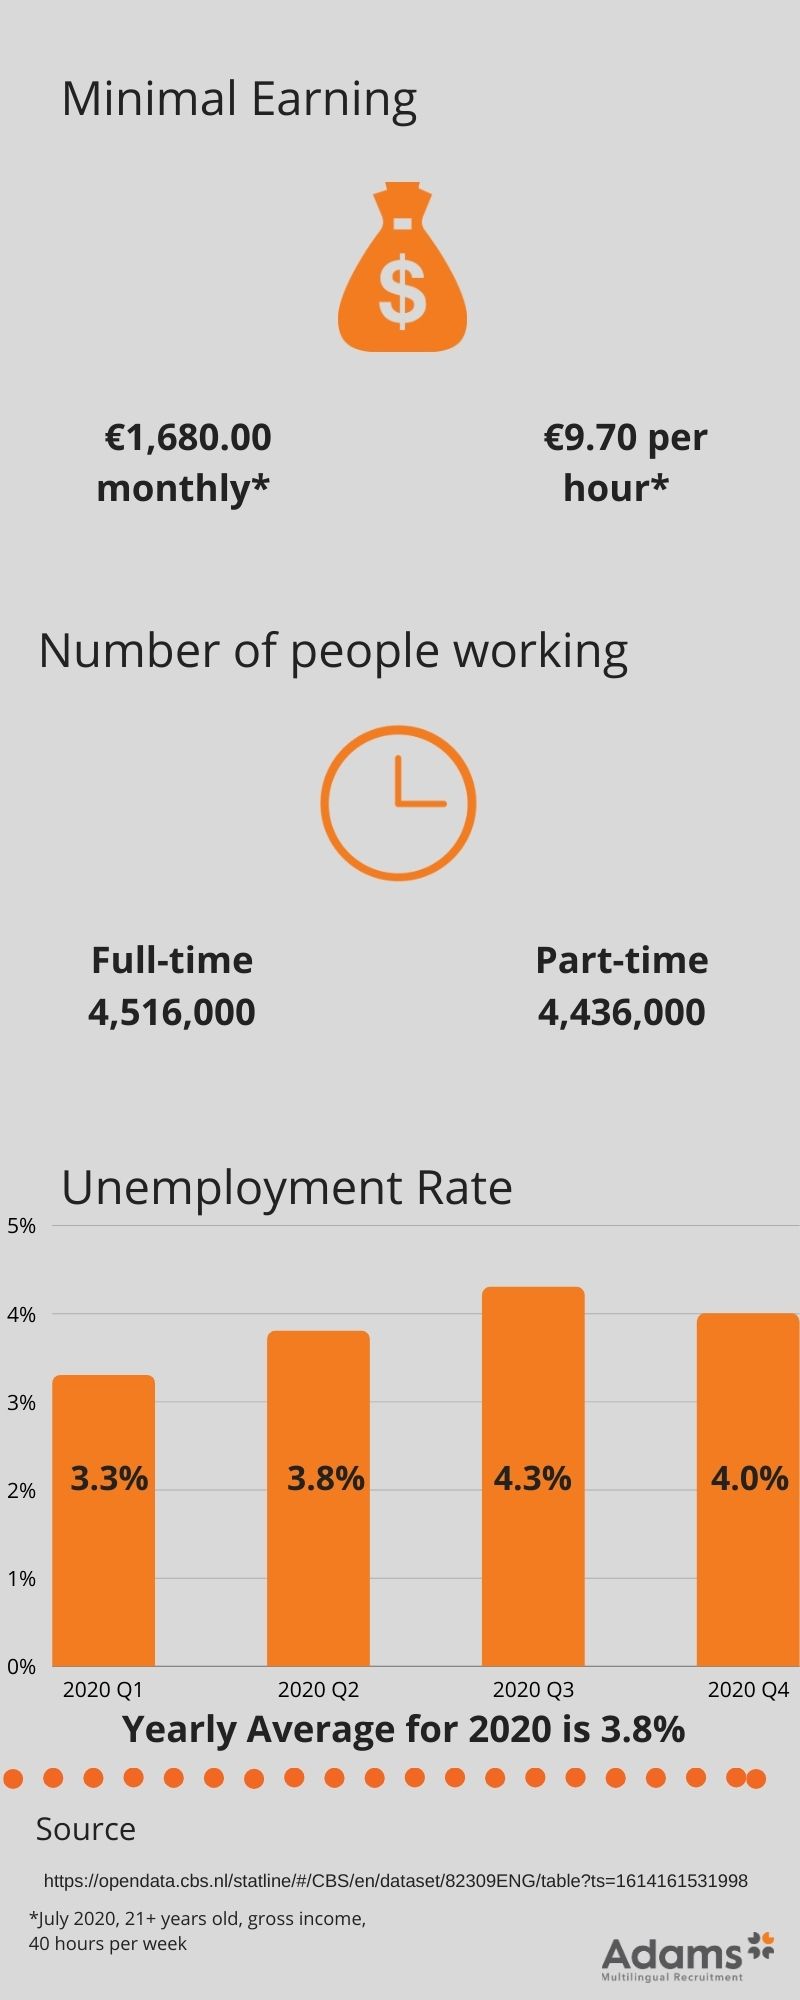 Labour market information, employment rate, minimum wage, working hours